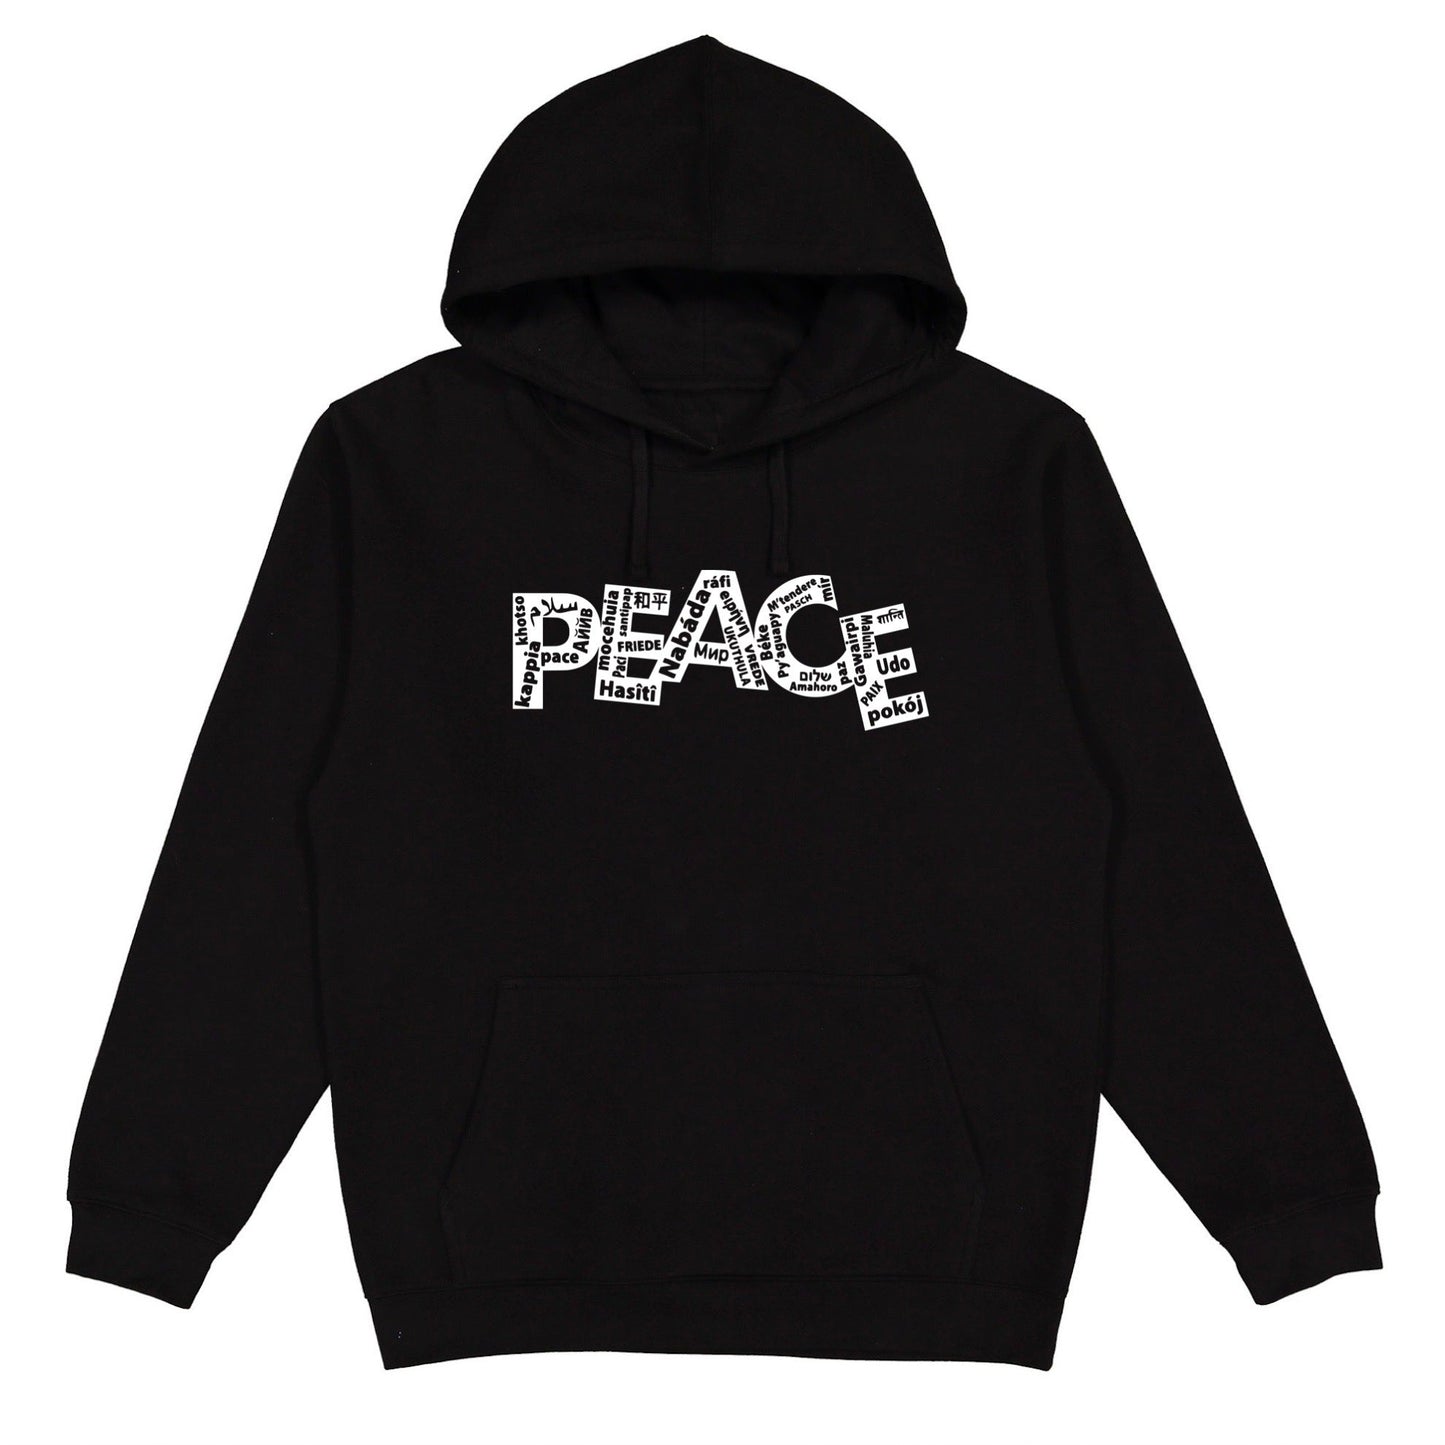 World Language Peace Hoodie Wear The Peace Hoodies S